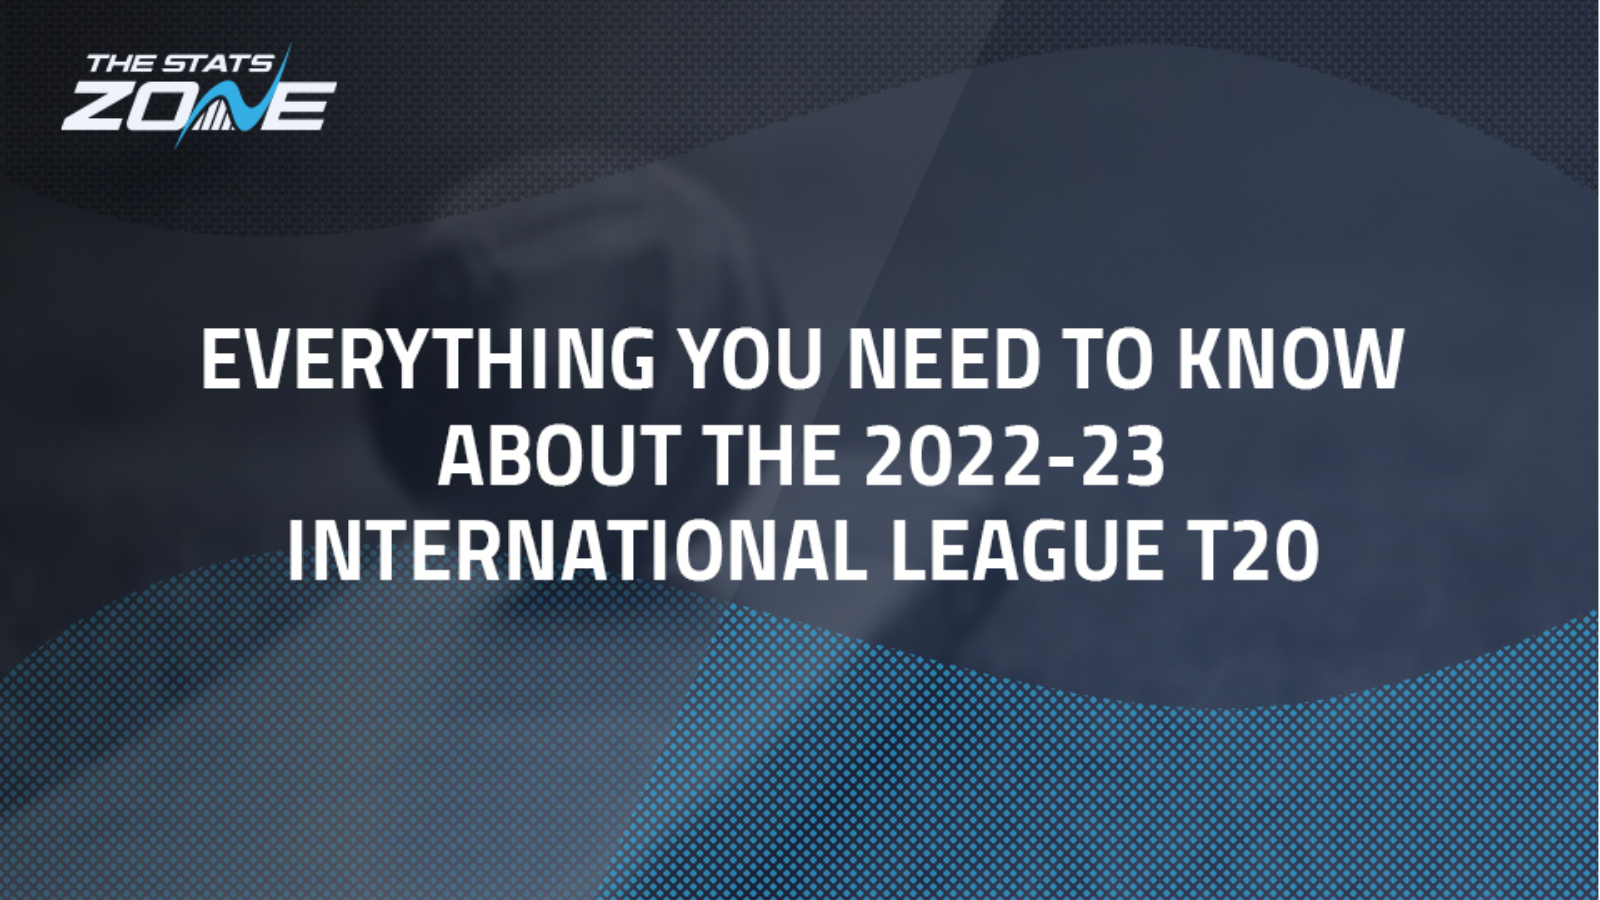 DP World International League T20 to use Teamworks.